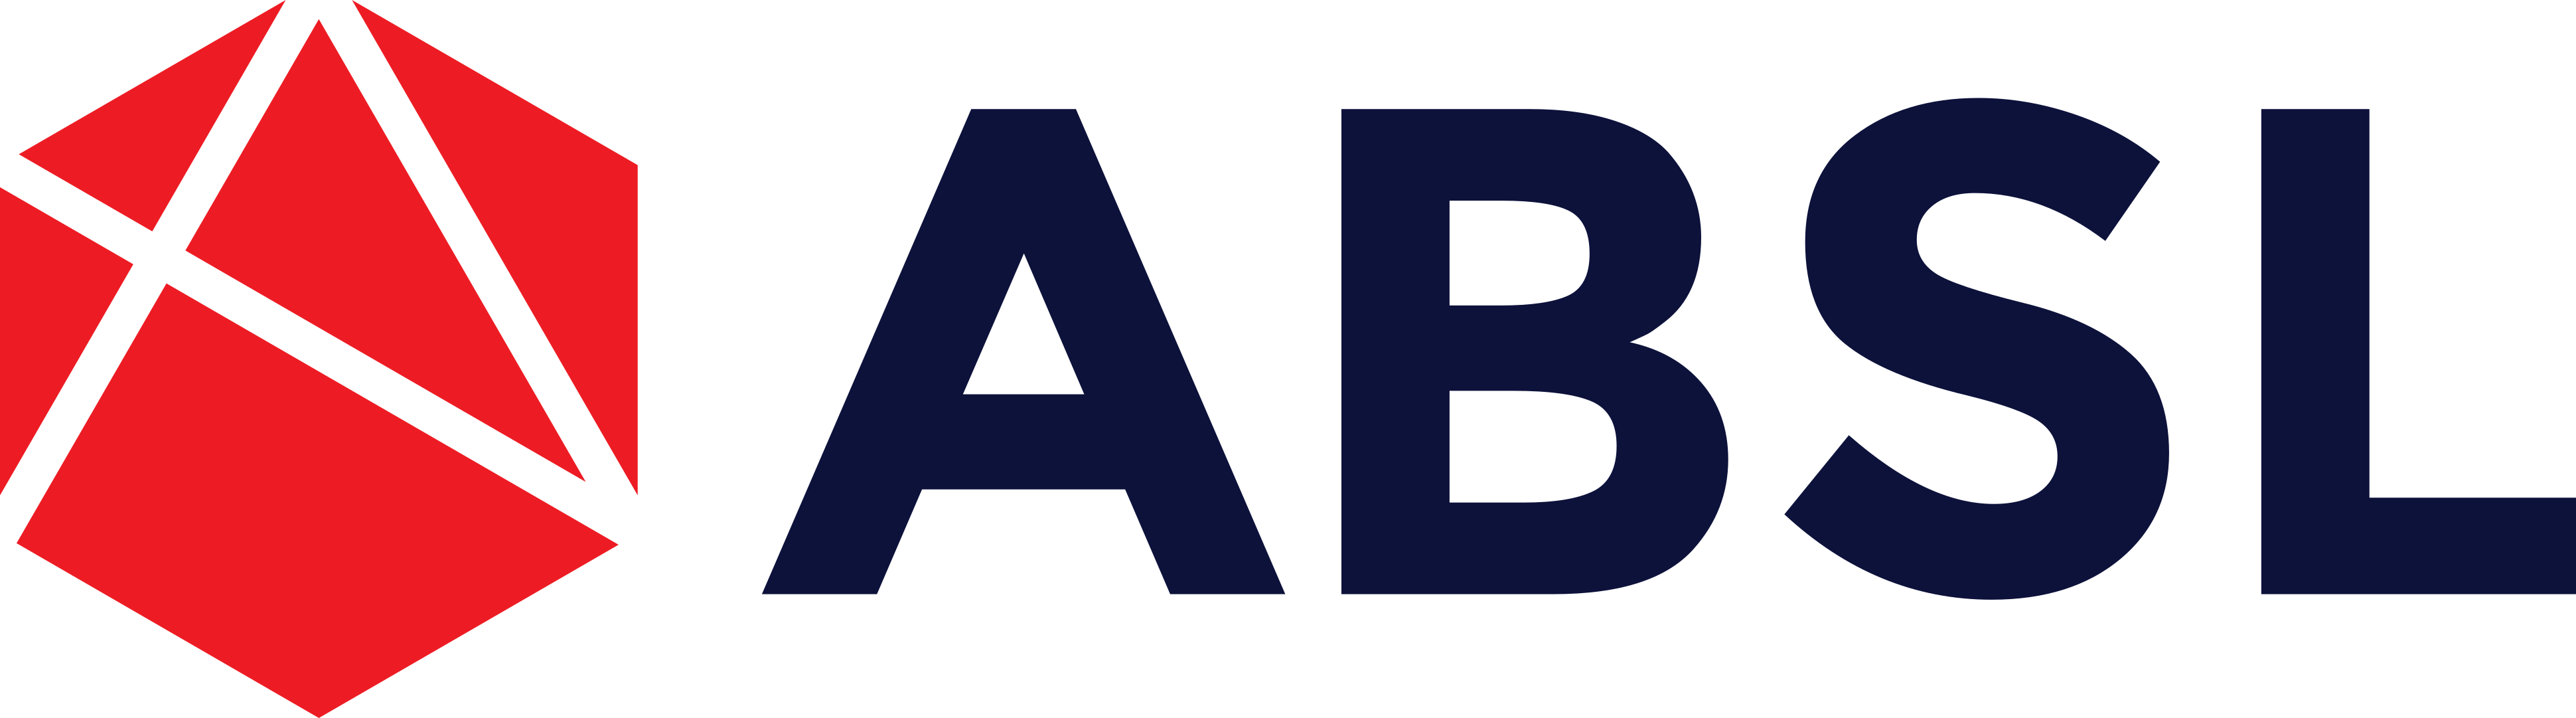 logo ABSL